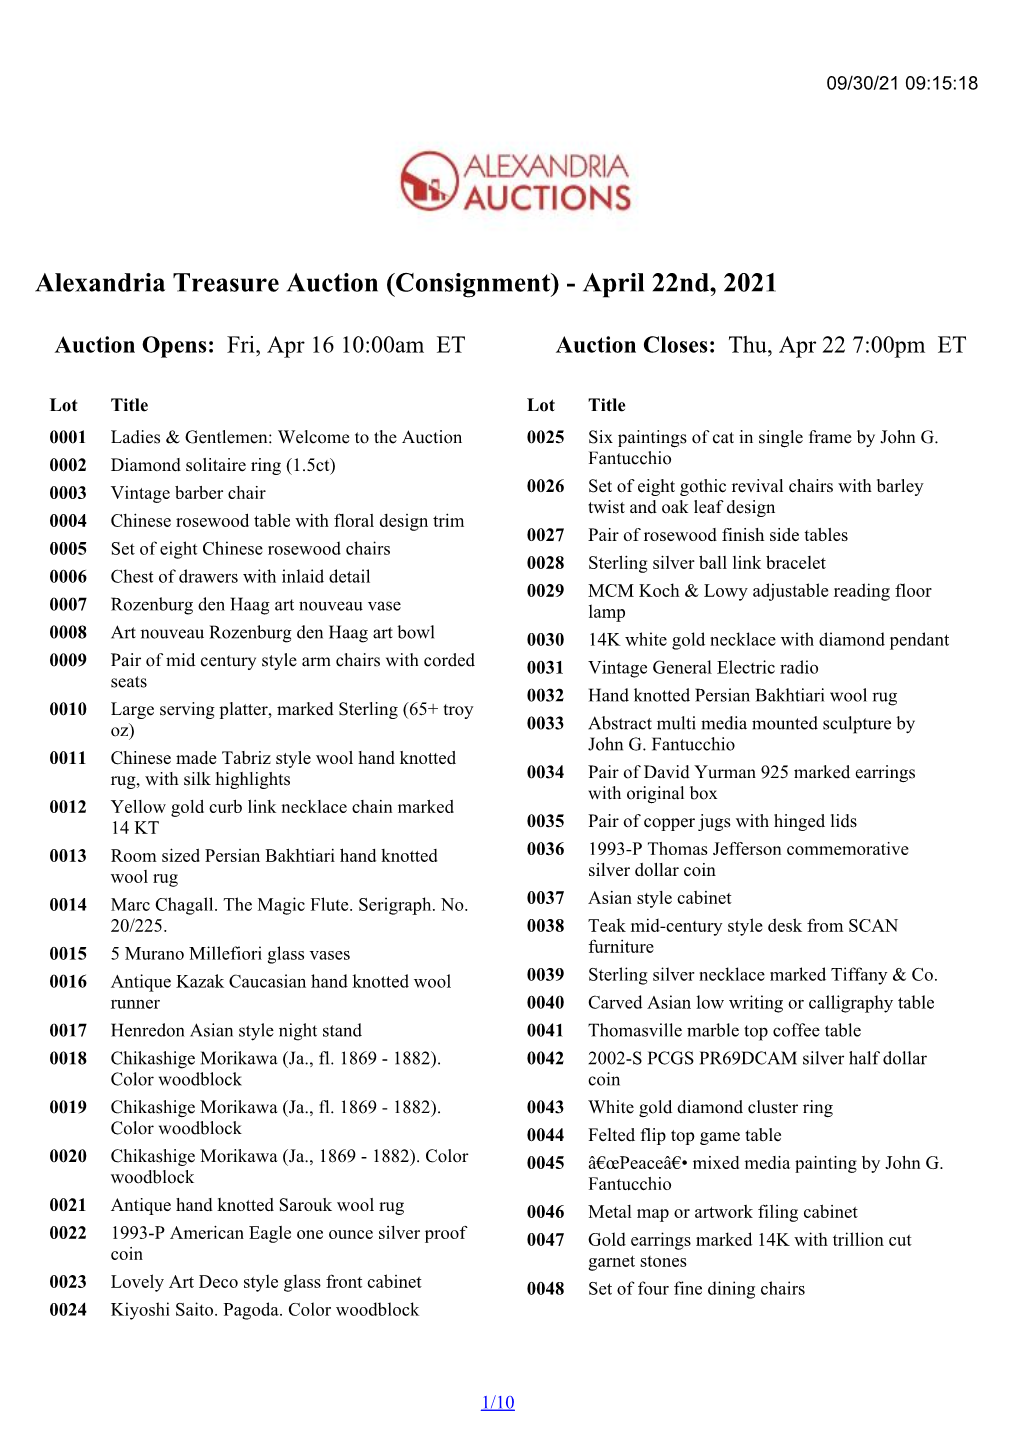 Alexandria Treasure Auction (Consignment) - April 22Nd, 2021